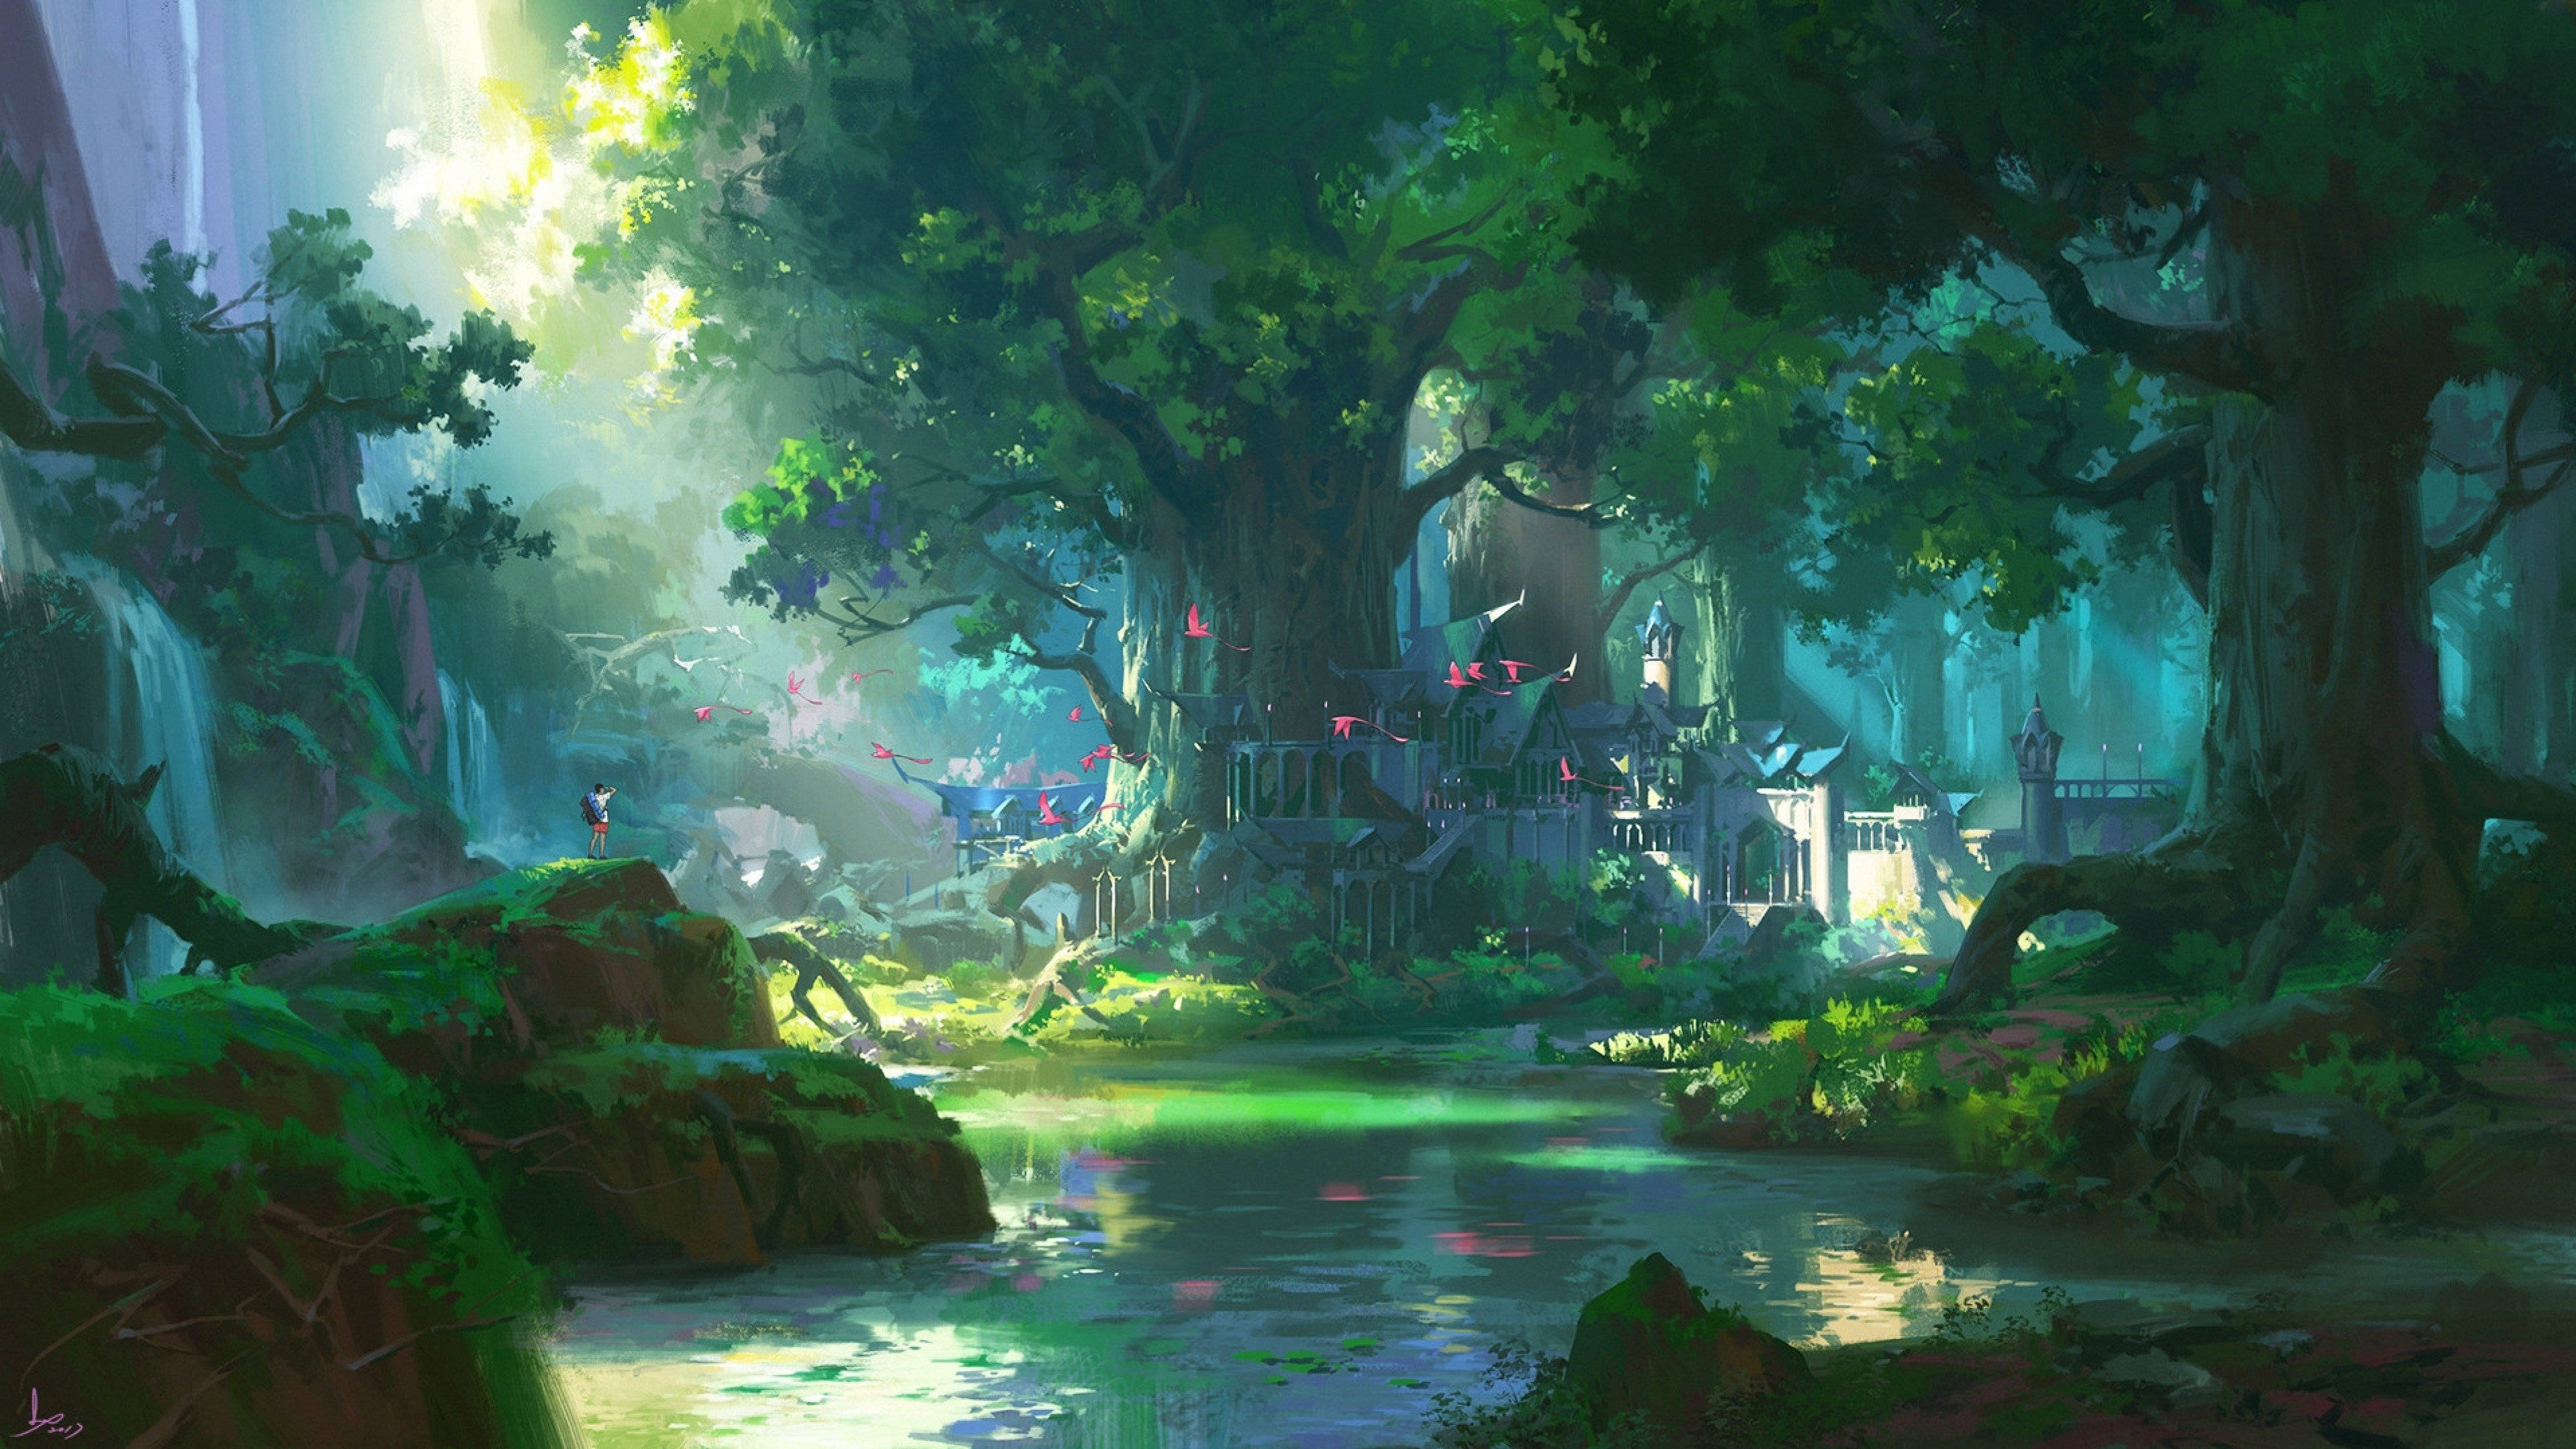 Download 4k Aesthetic Anime Forest Wallpaper